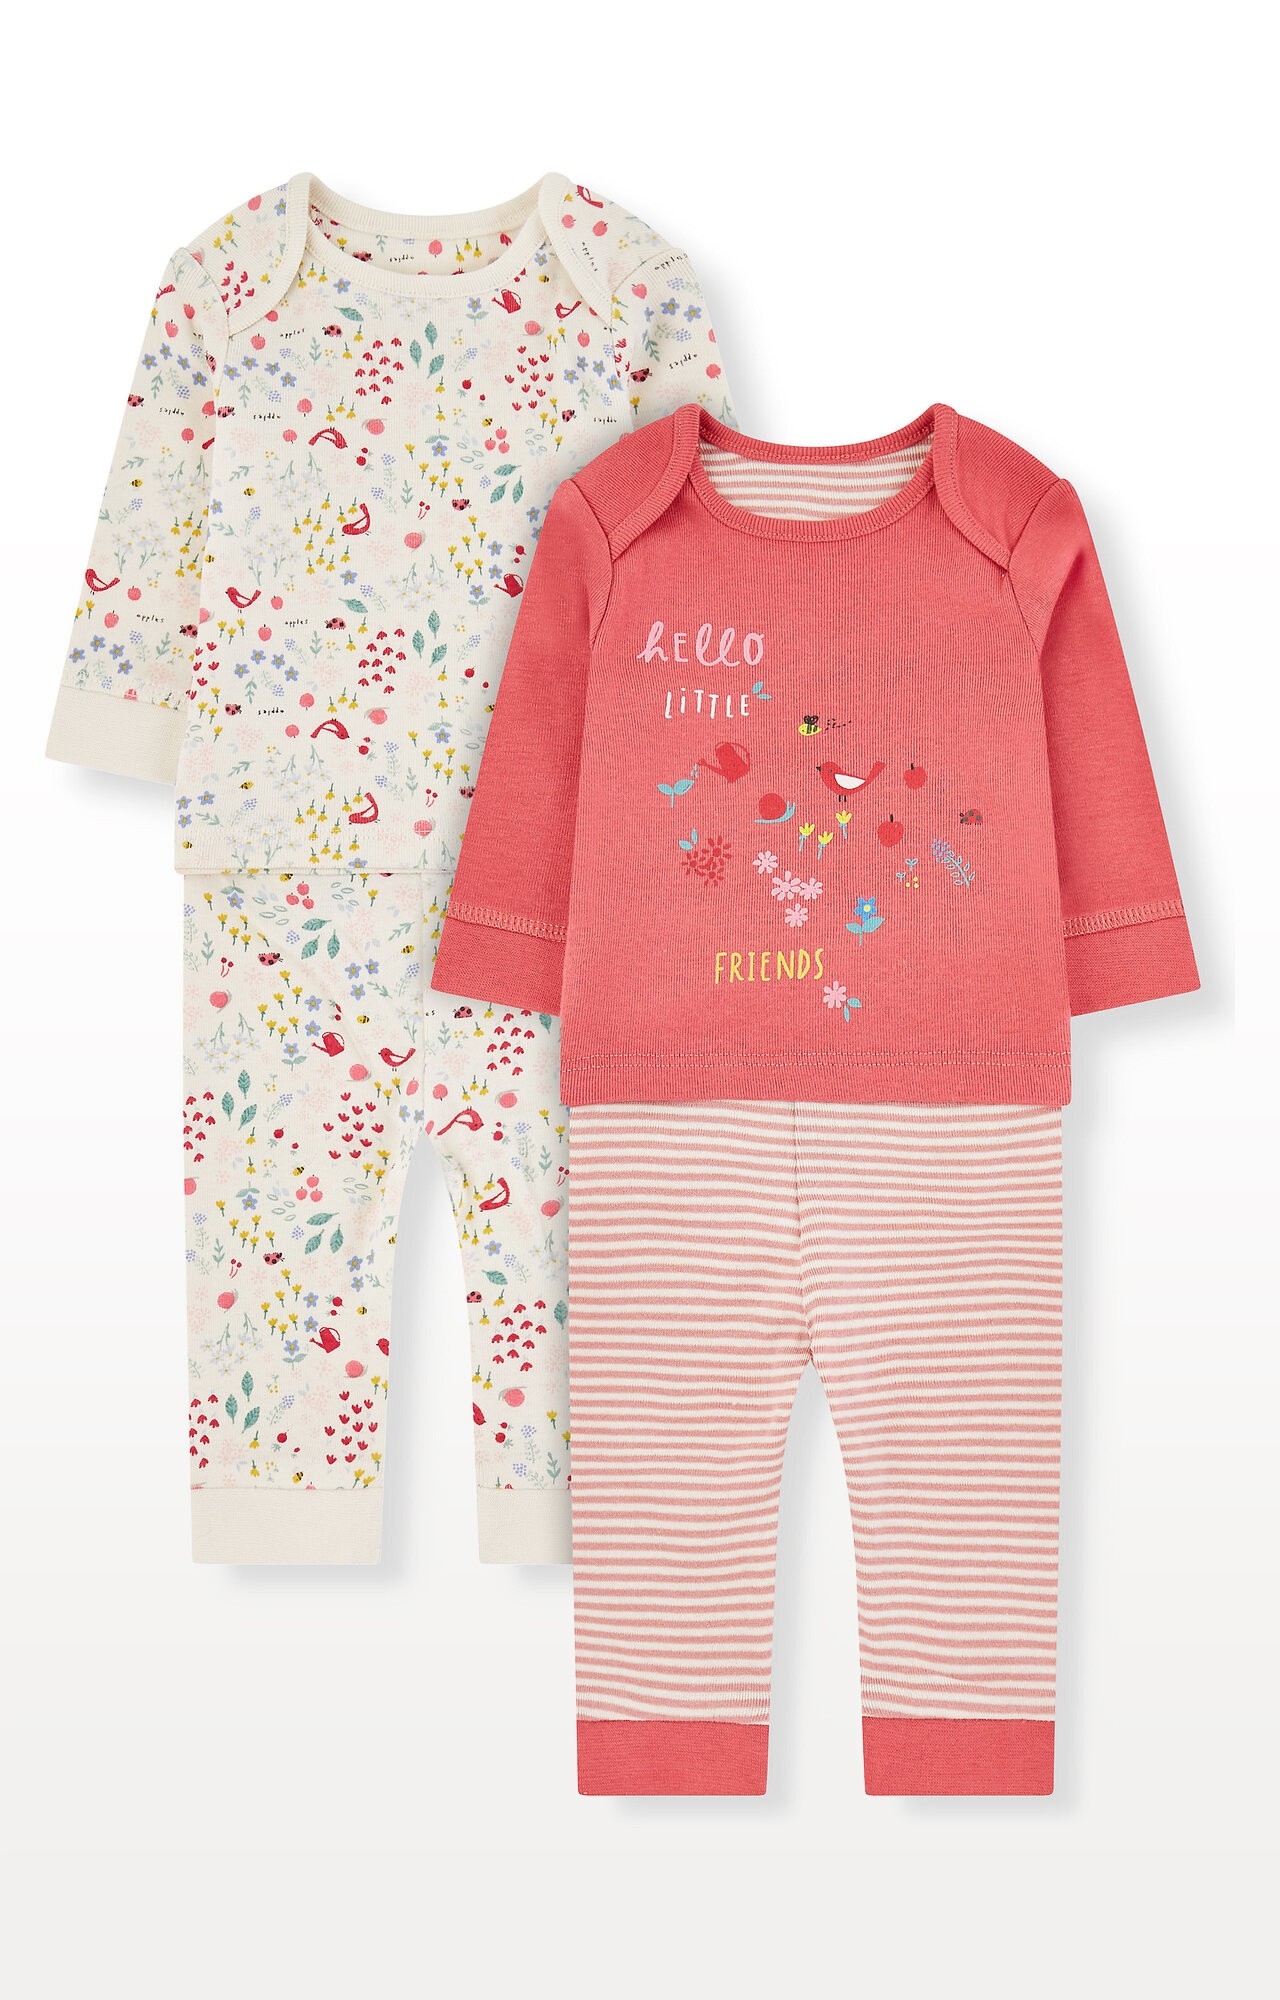 Floral Little Friends Pyjamas - Pack of 2